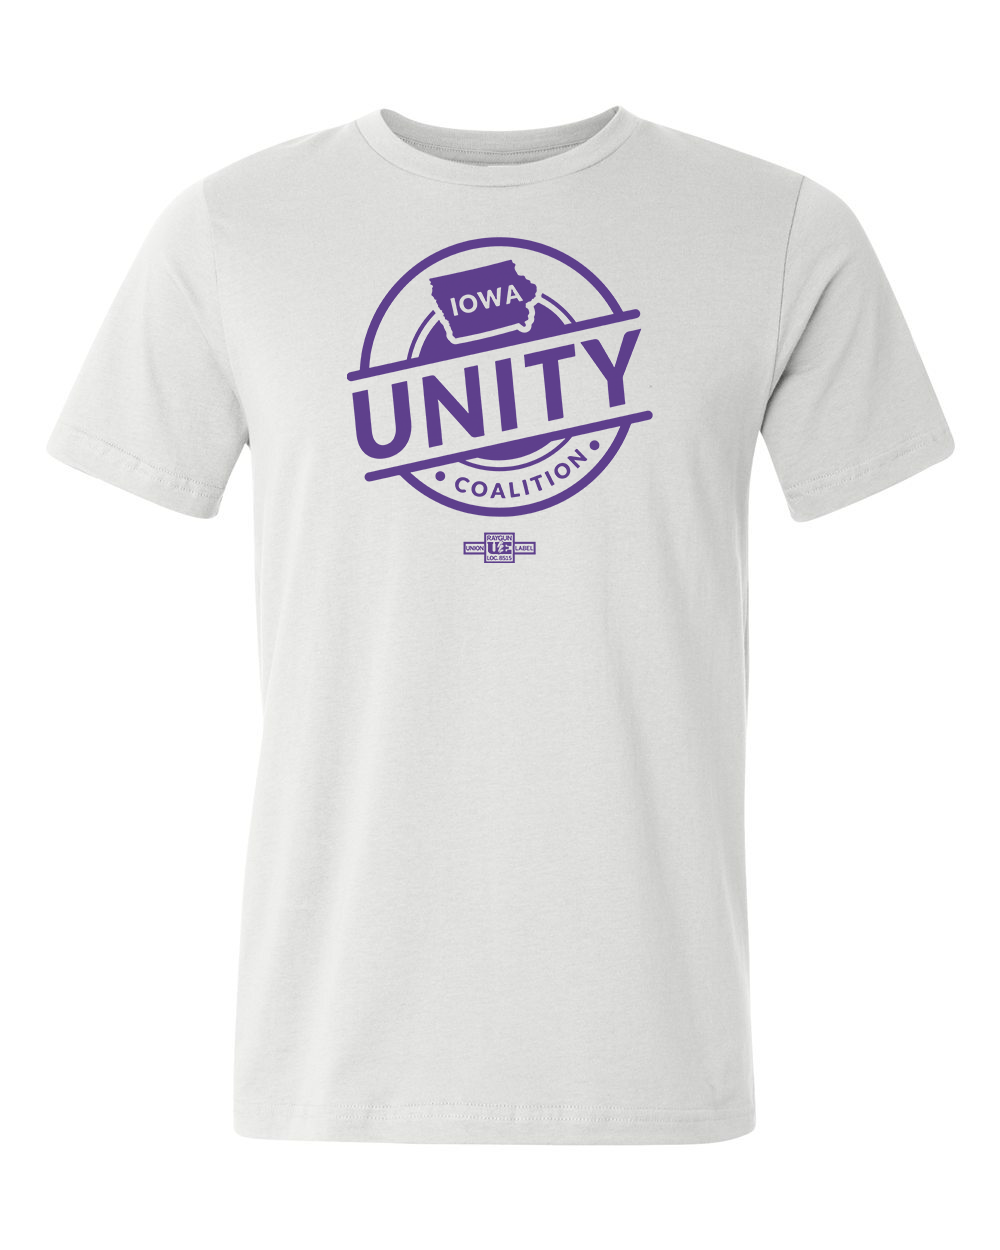 Iowa Unity Coalition t-shirt